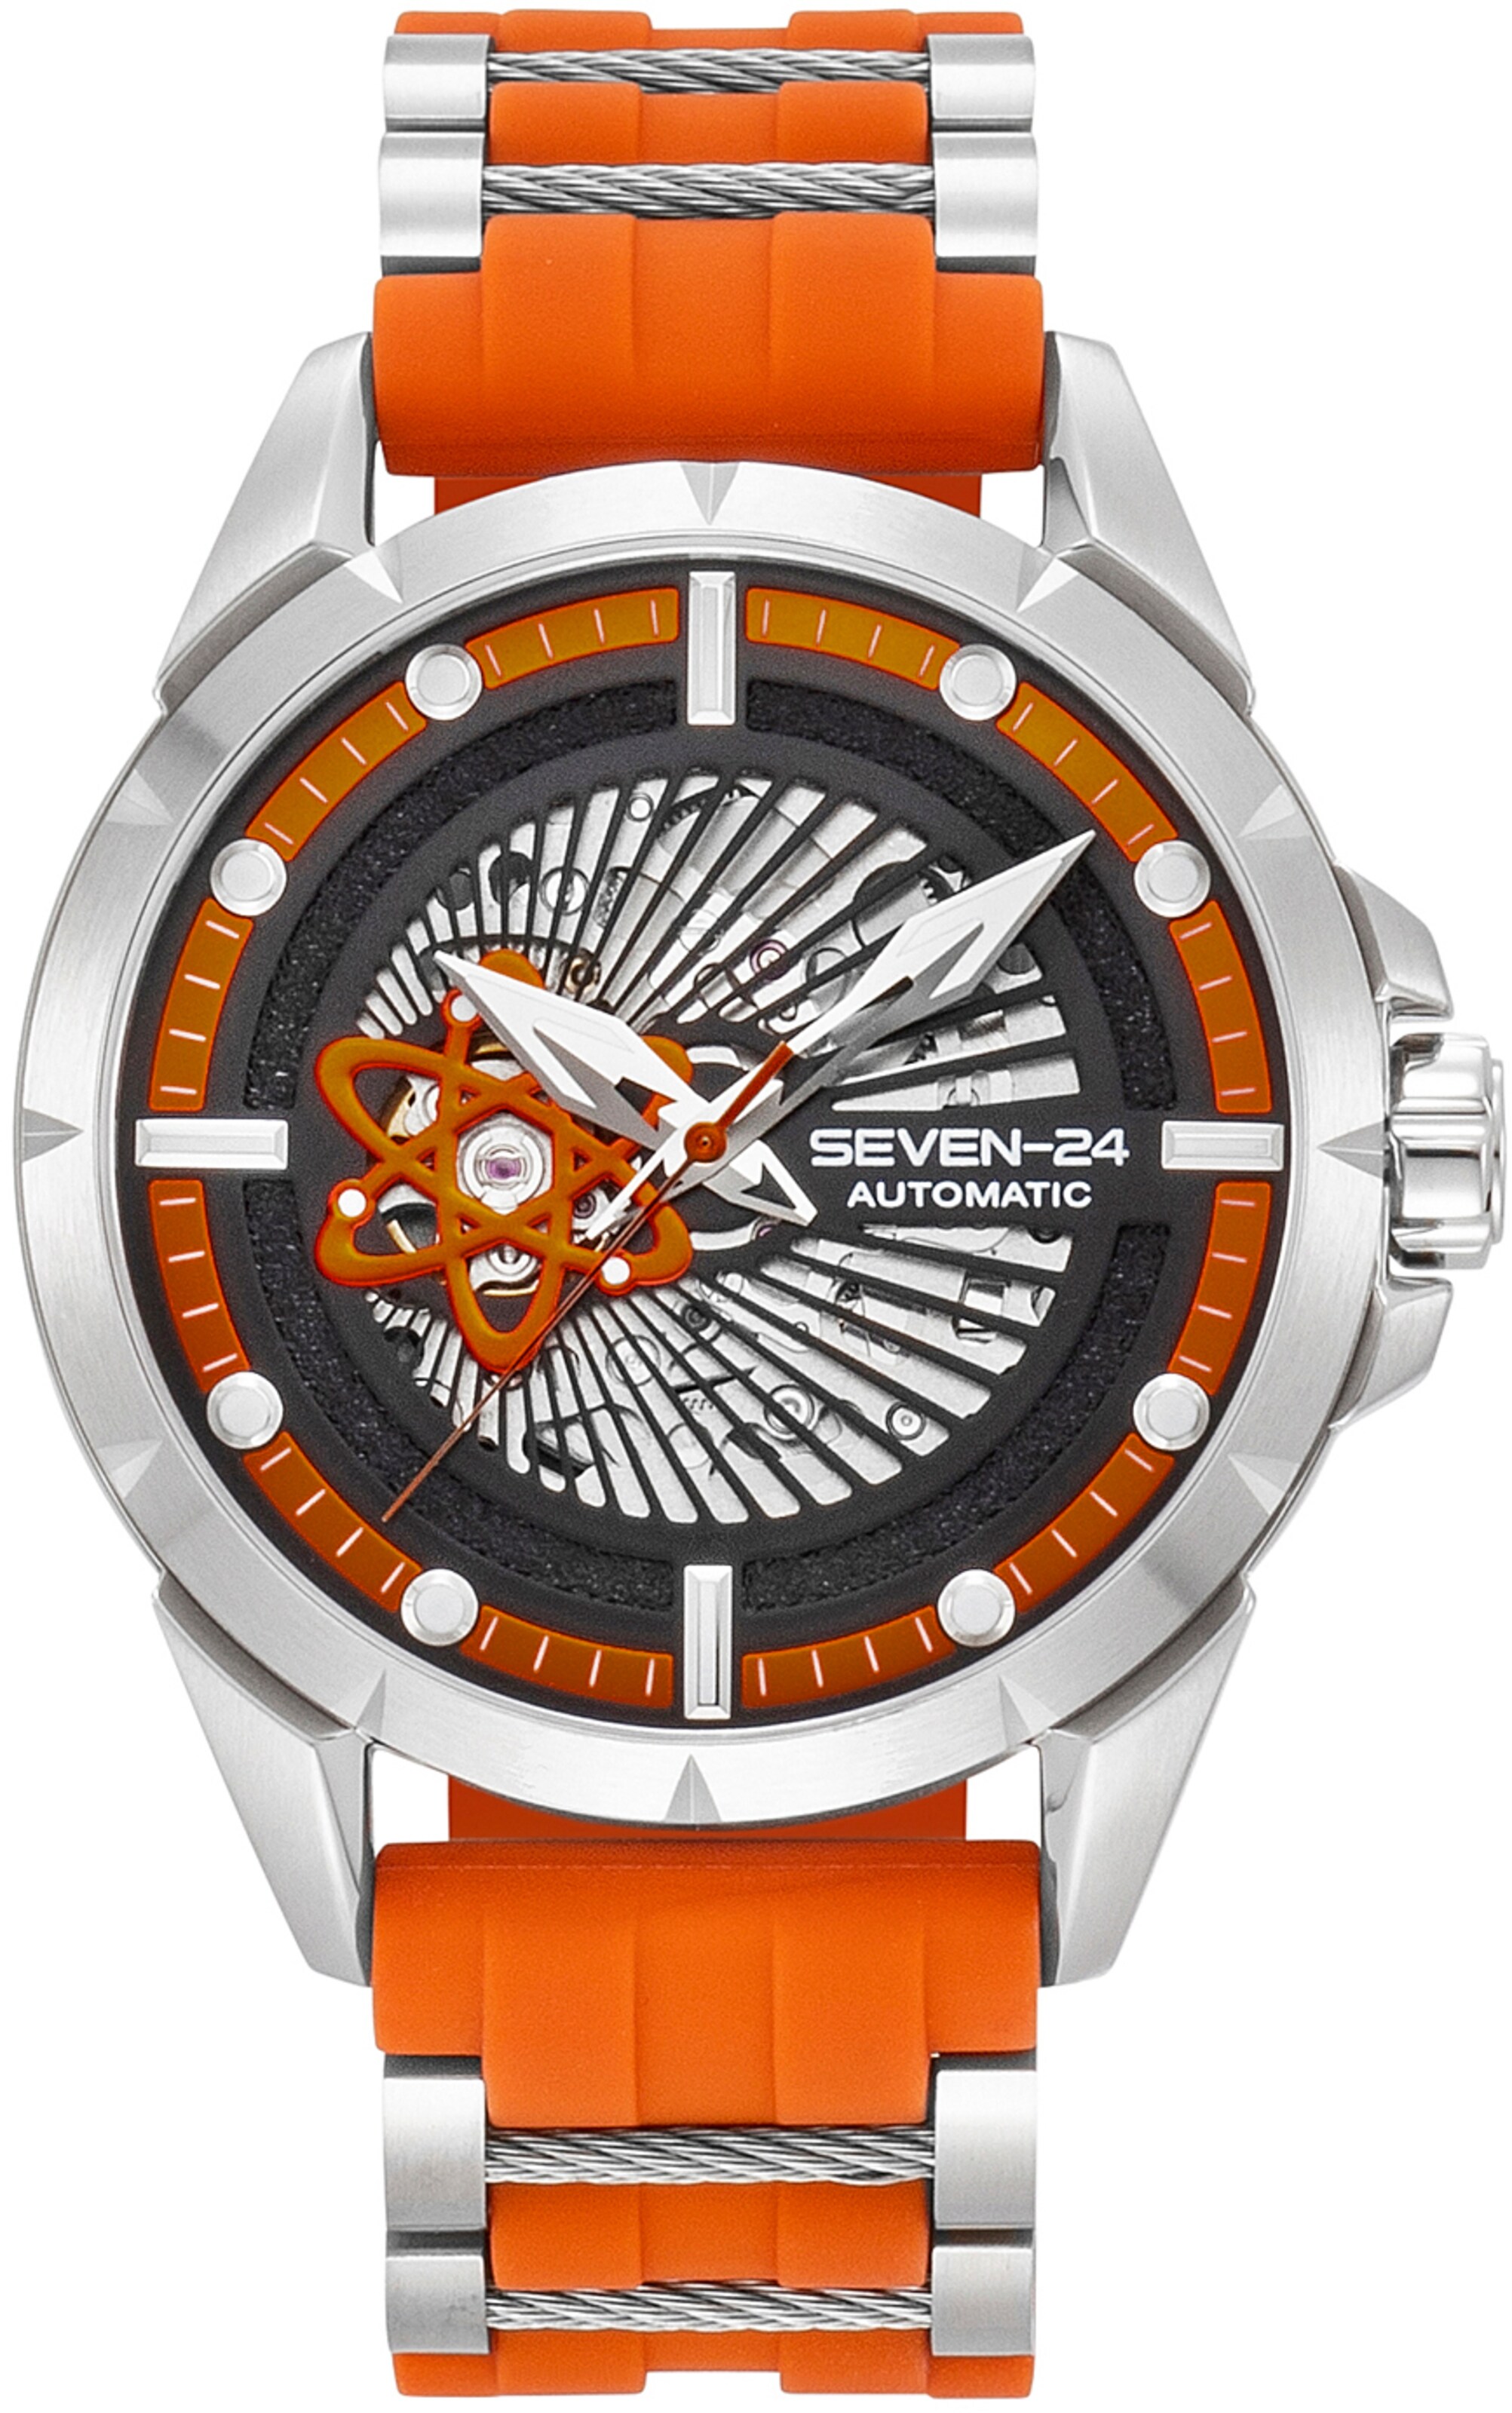 Männer Uhren SEVEN-24 Analoguhr in Orange - HF63786